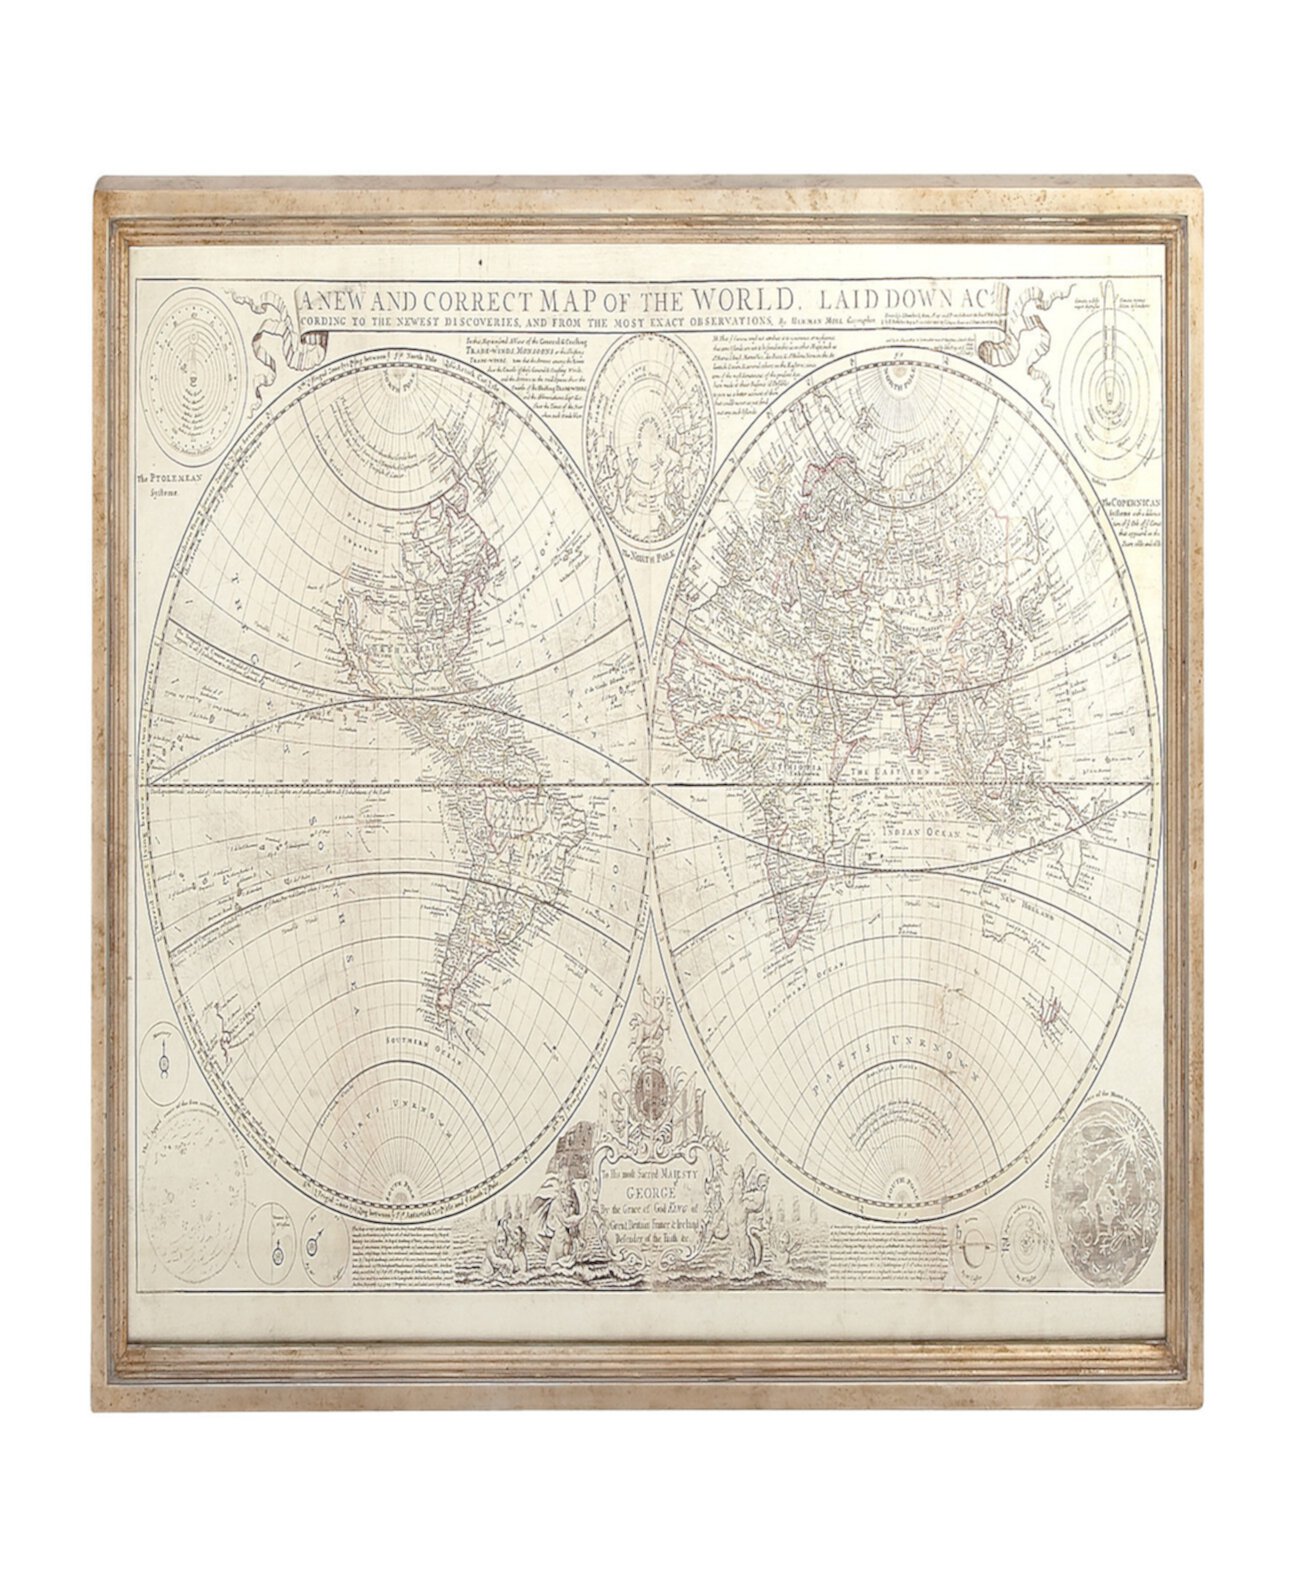 Картина на холсте с картой мира в рамке с золотой рамкой, 48 x 2 x 31 дюйм Rosemary Lane